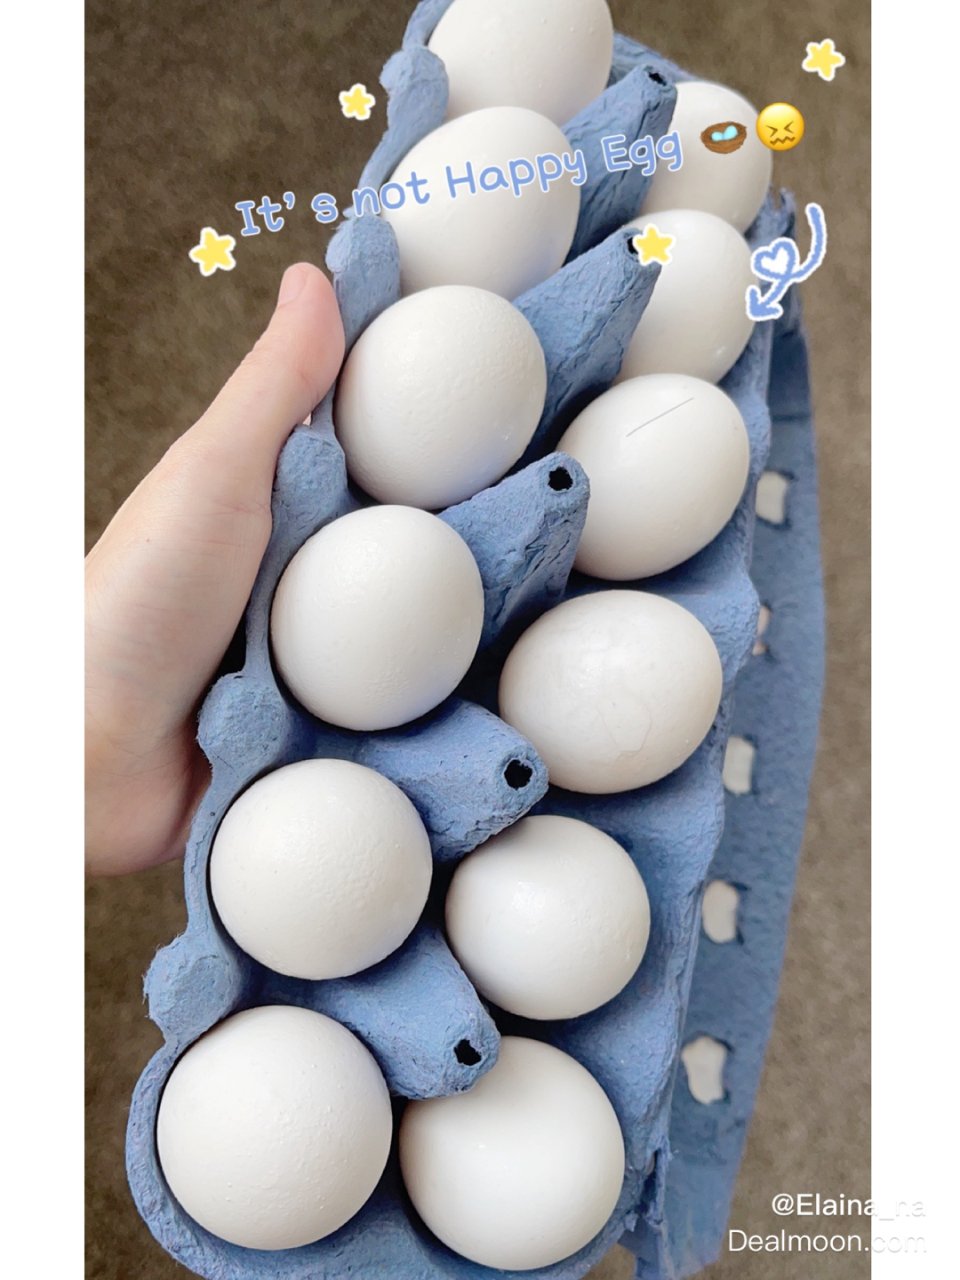 Happy Egg被偷梁换柱😱，超市采购...